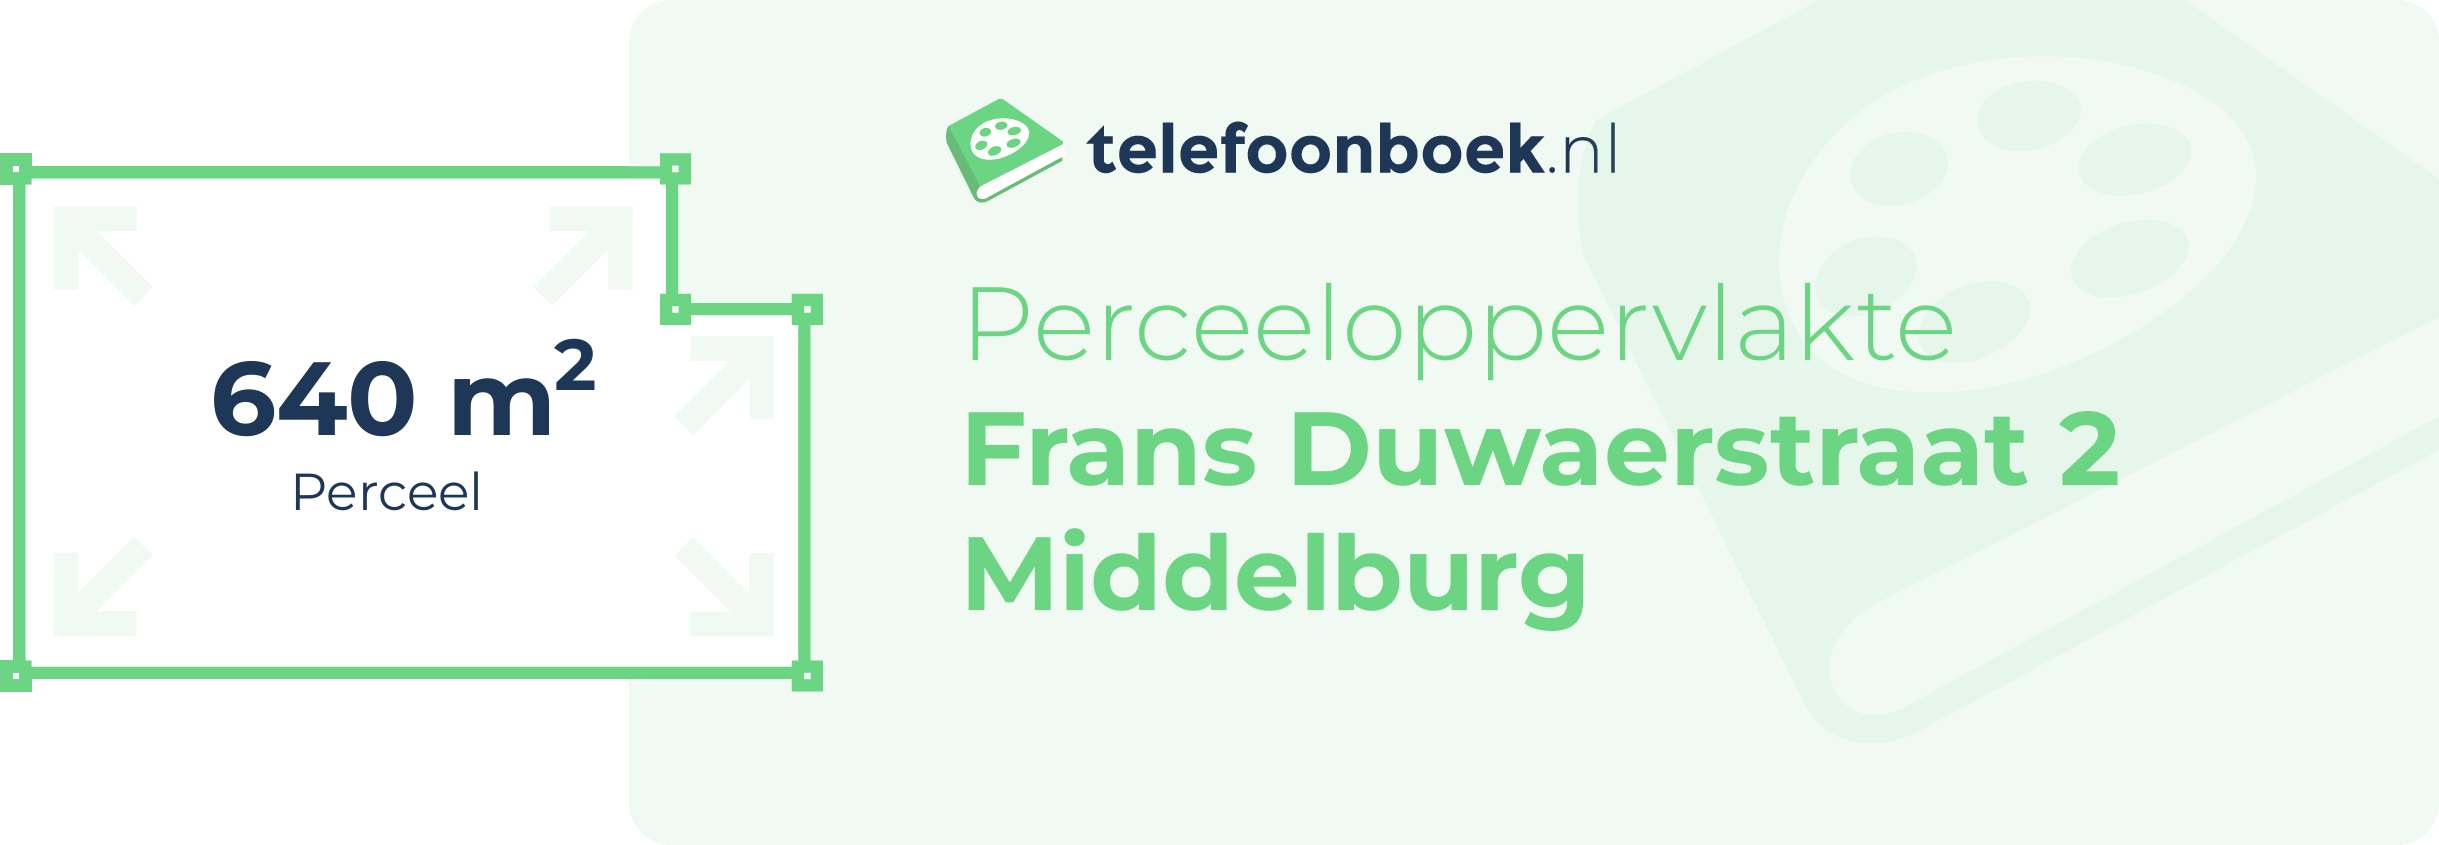 Perceeloppervlakte Frans Duwaerstraat 2 Middelburg